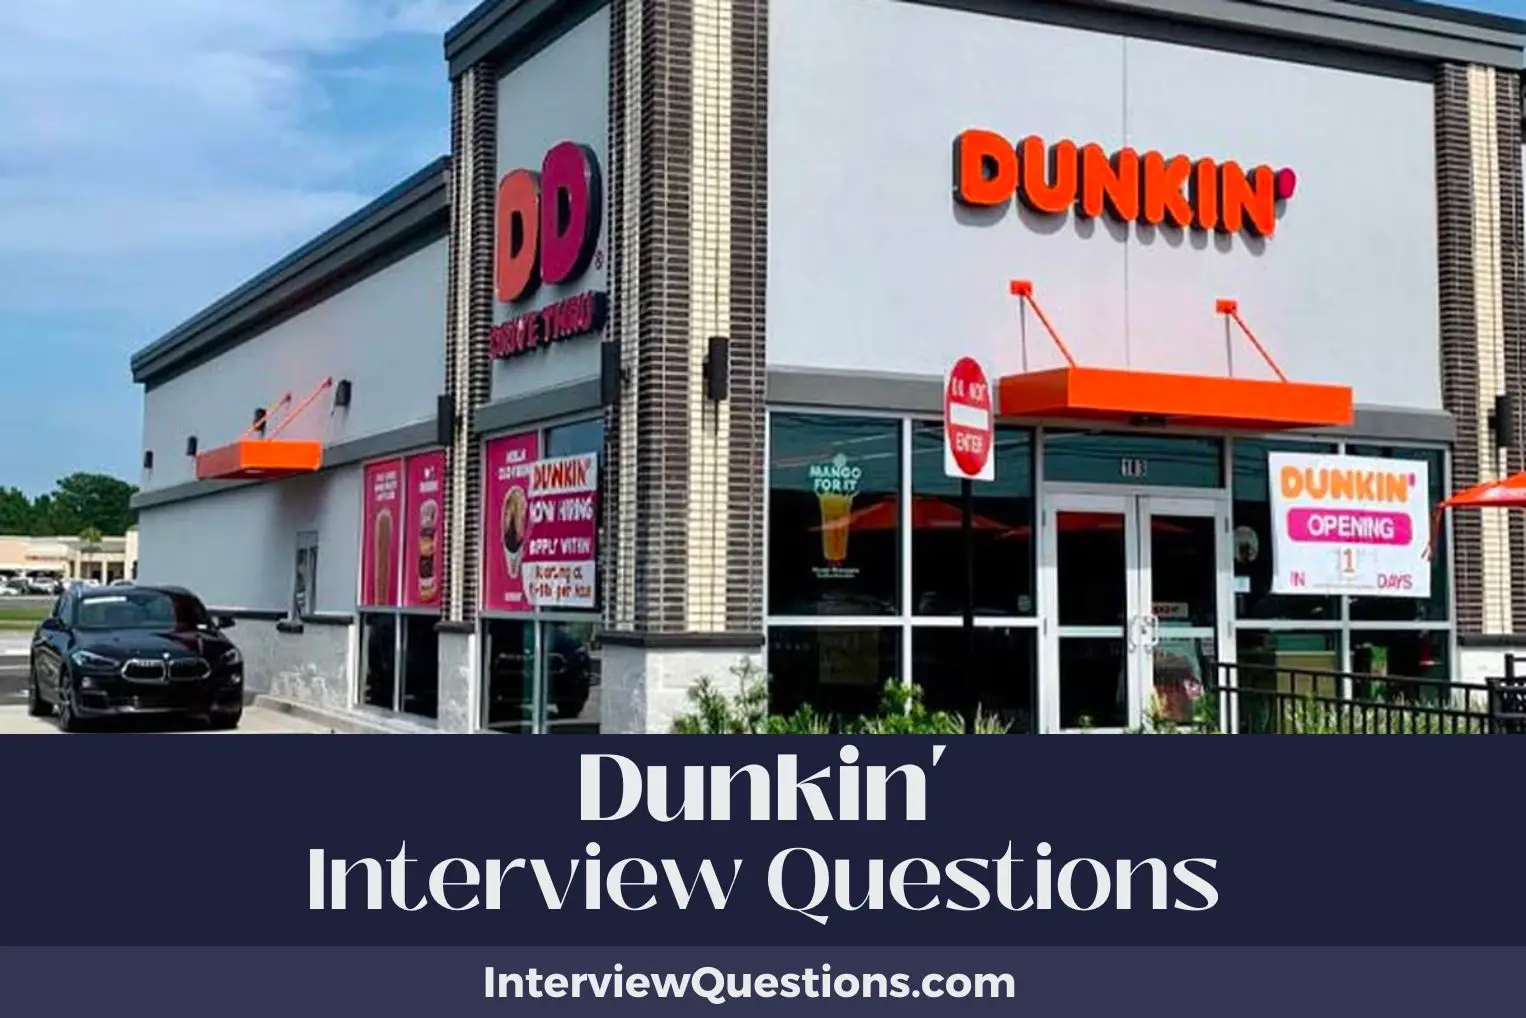 Dunkin' Interview Questions